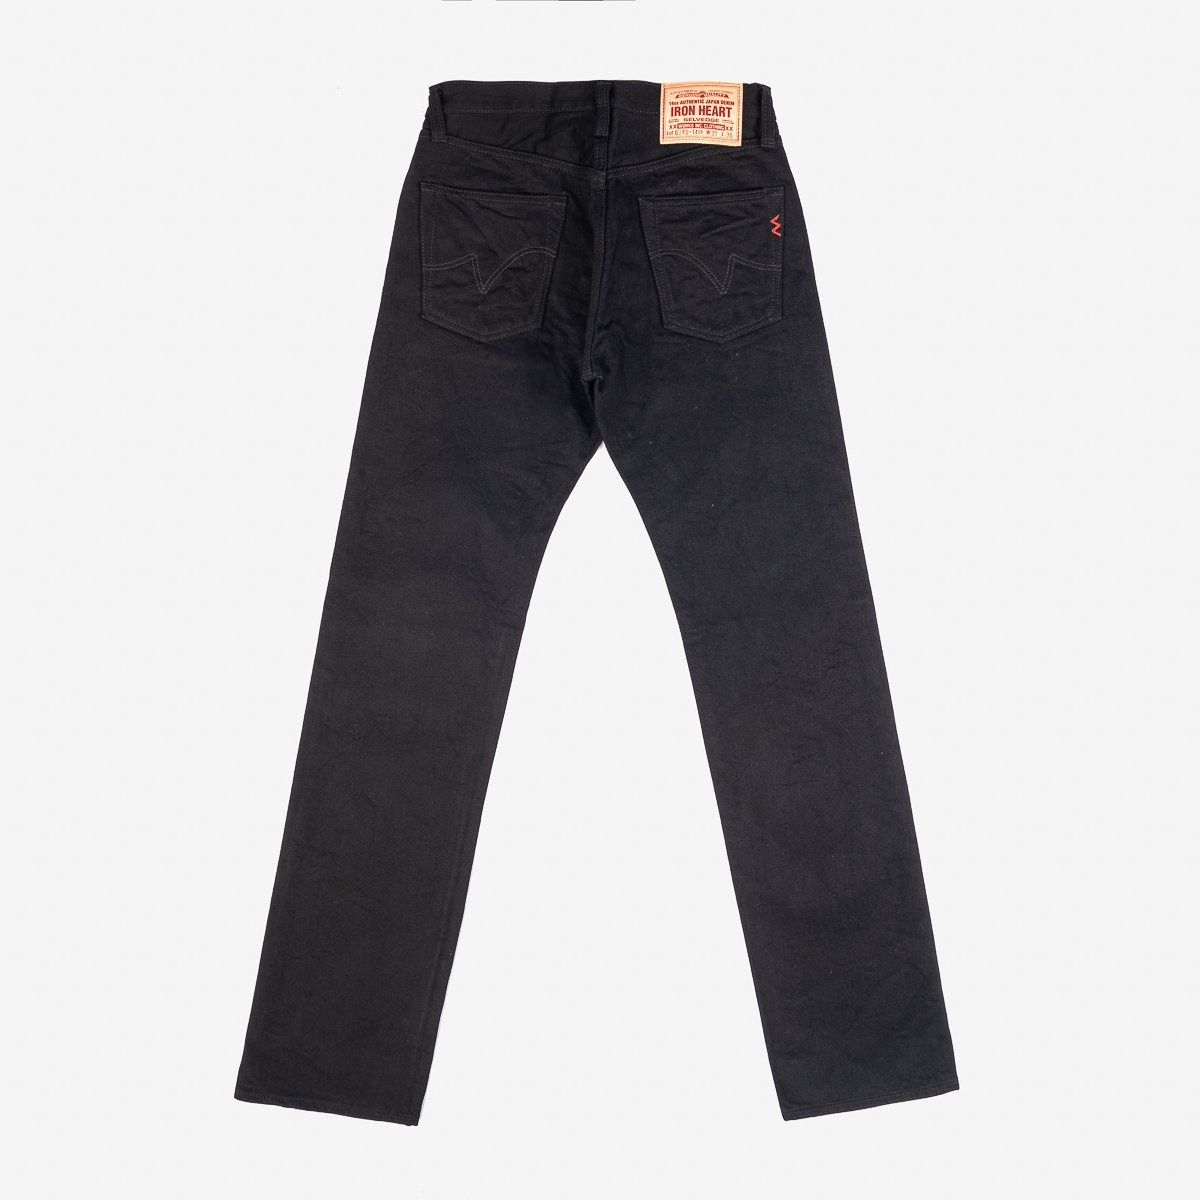 IH-634S-142bb 14oz Selvedge Denim Straight Cut Jeans - Black/Black - 5